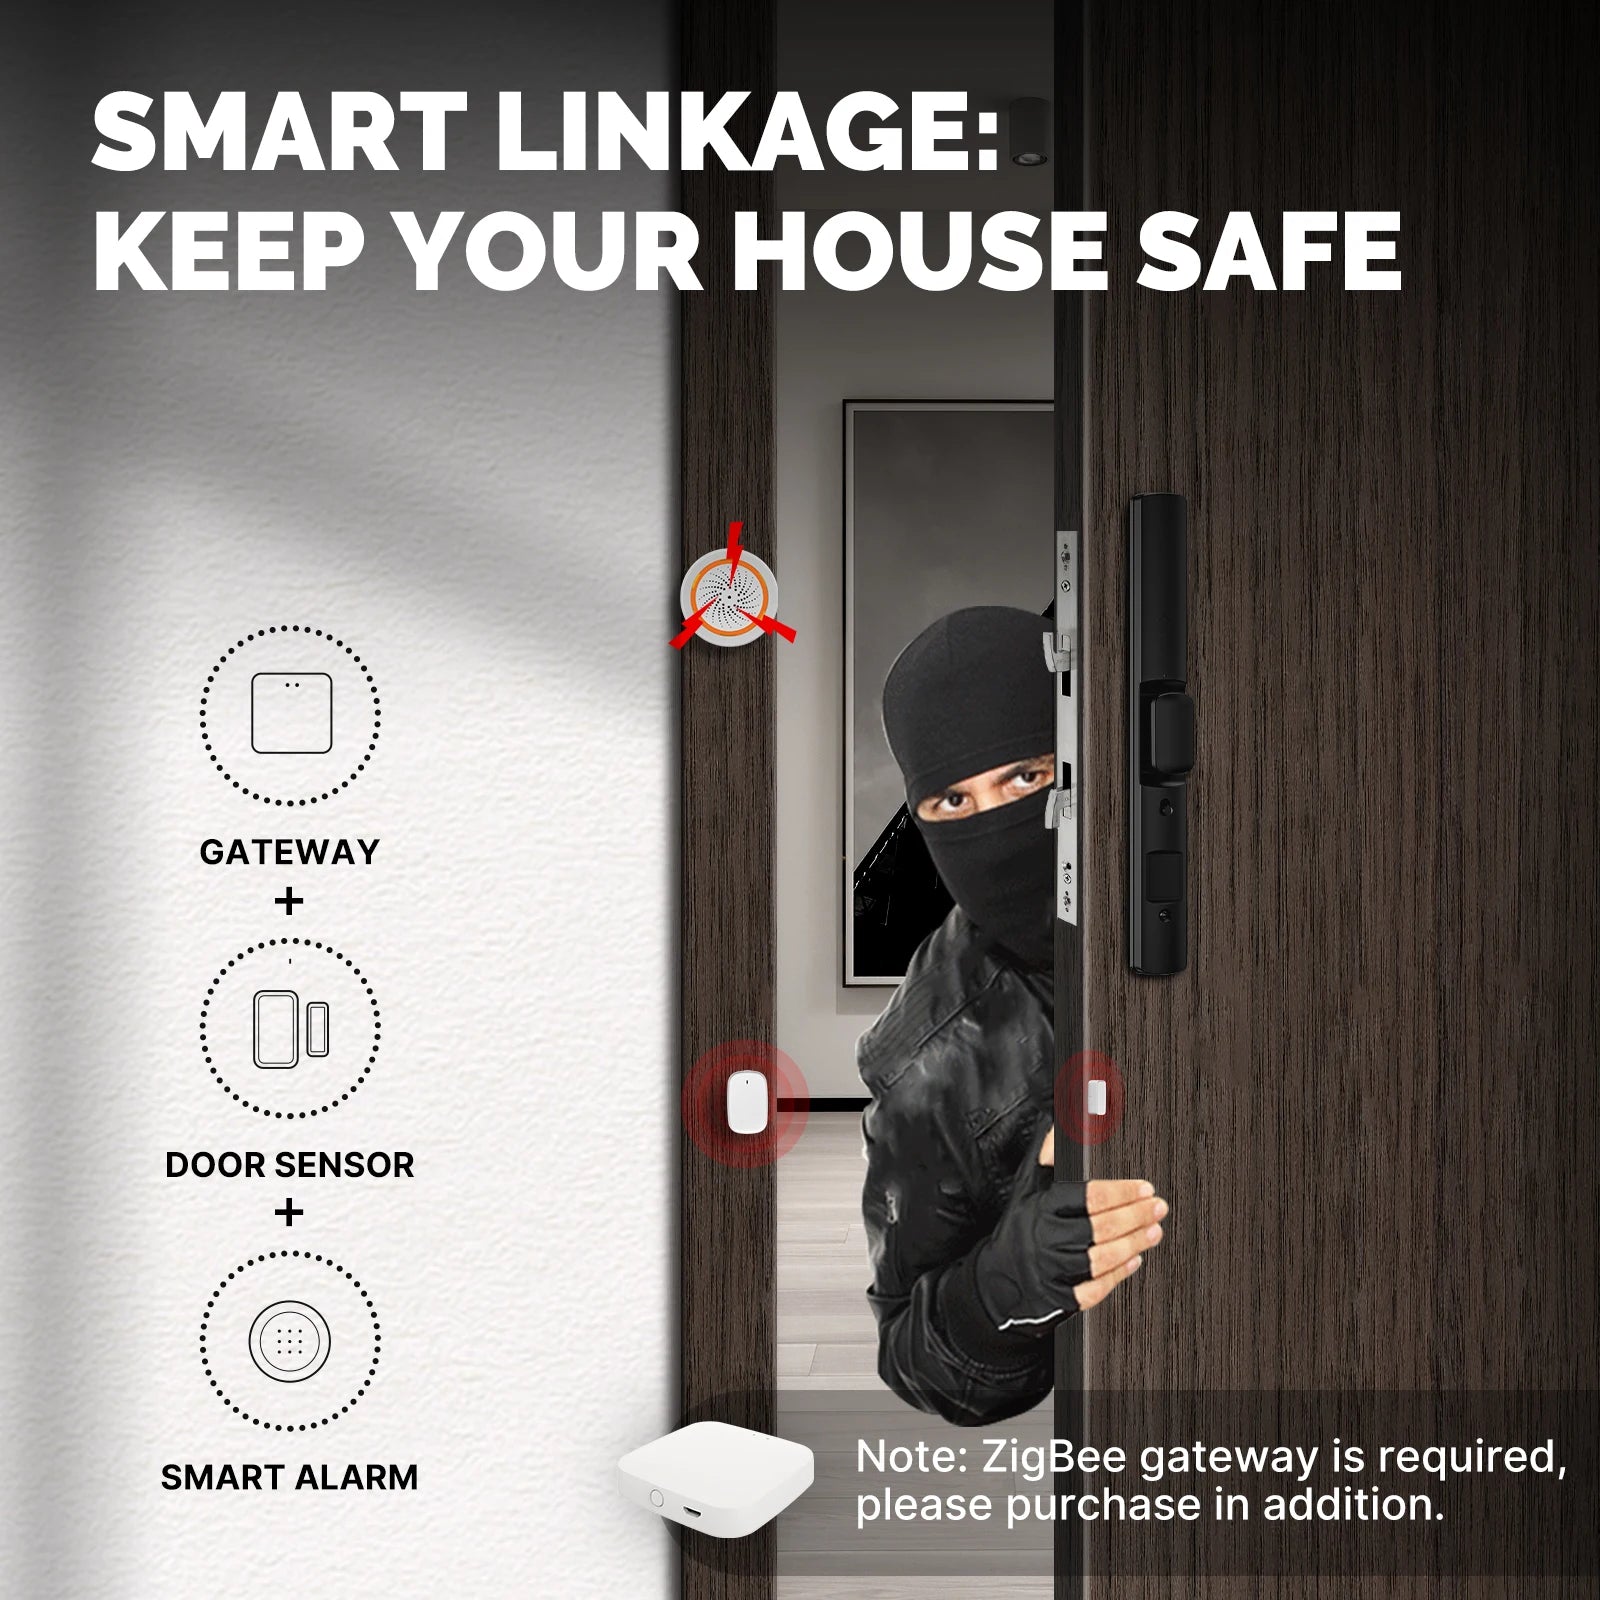 Tuya Zigbee Smart Window Door Gate Sensor Detector Smart Home Security Alarm System Smart Life Tuya App Remote Control